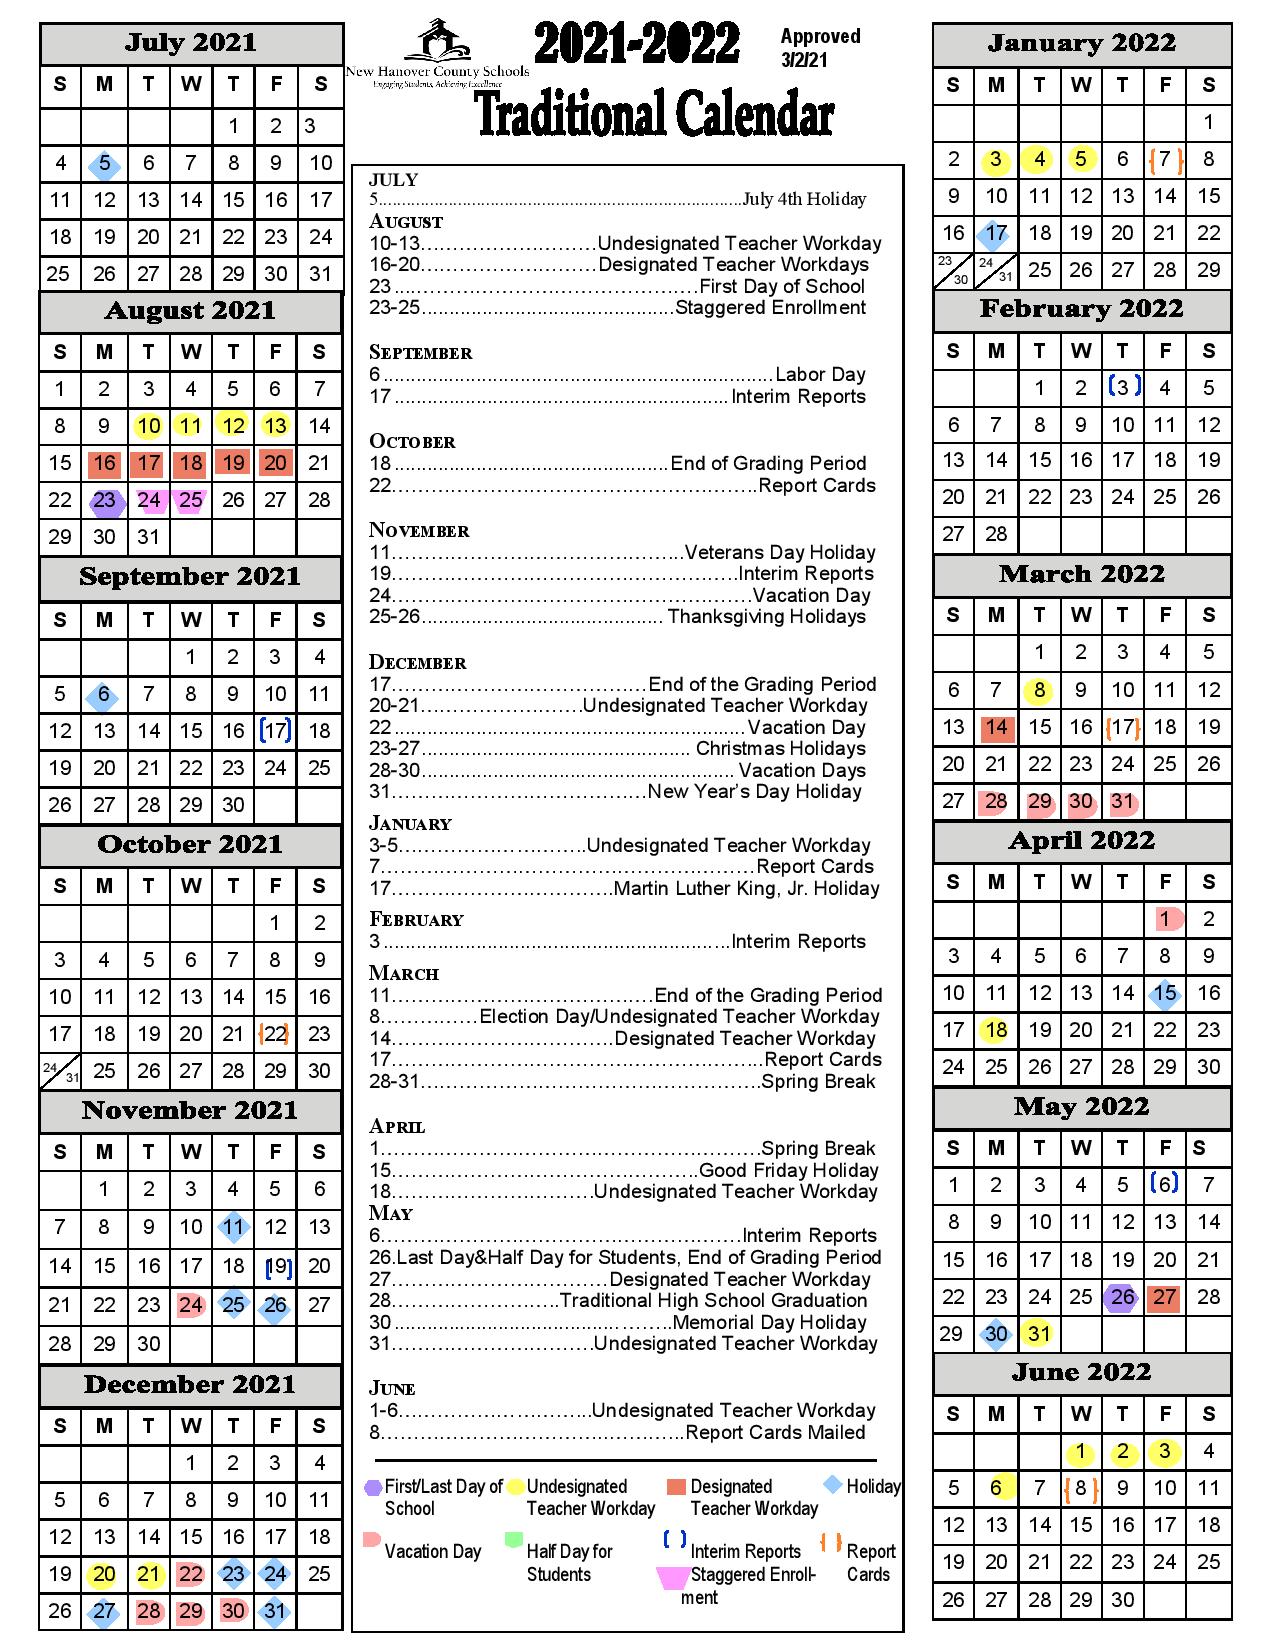 New Hanover County Schools Calendar 2021 2022